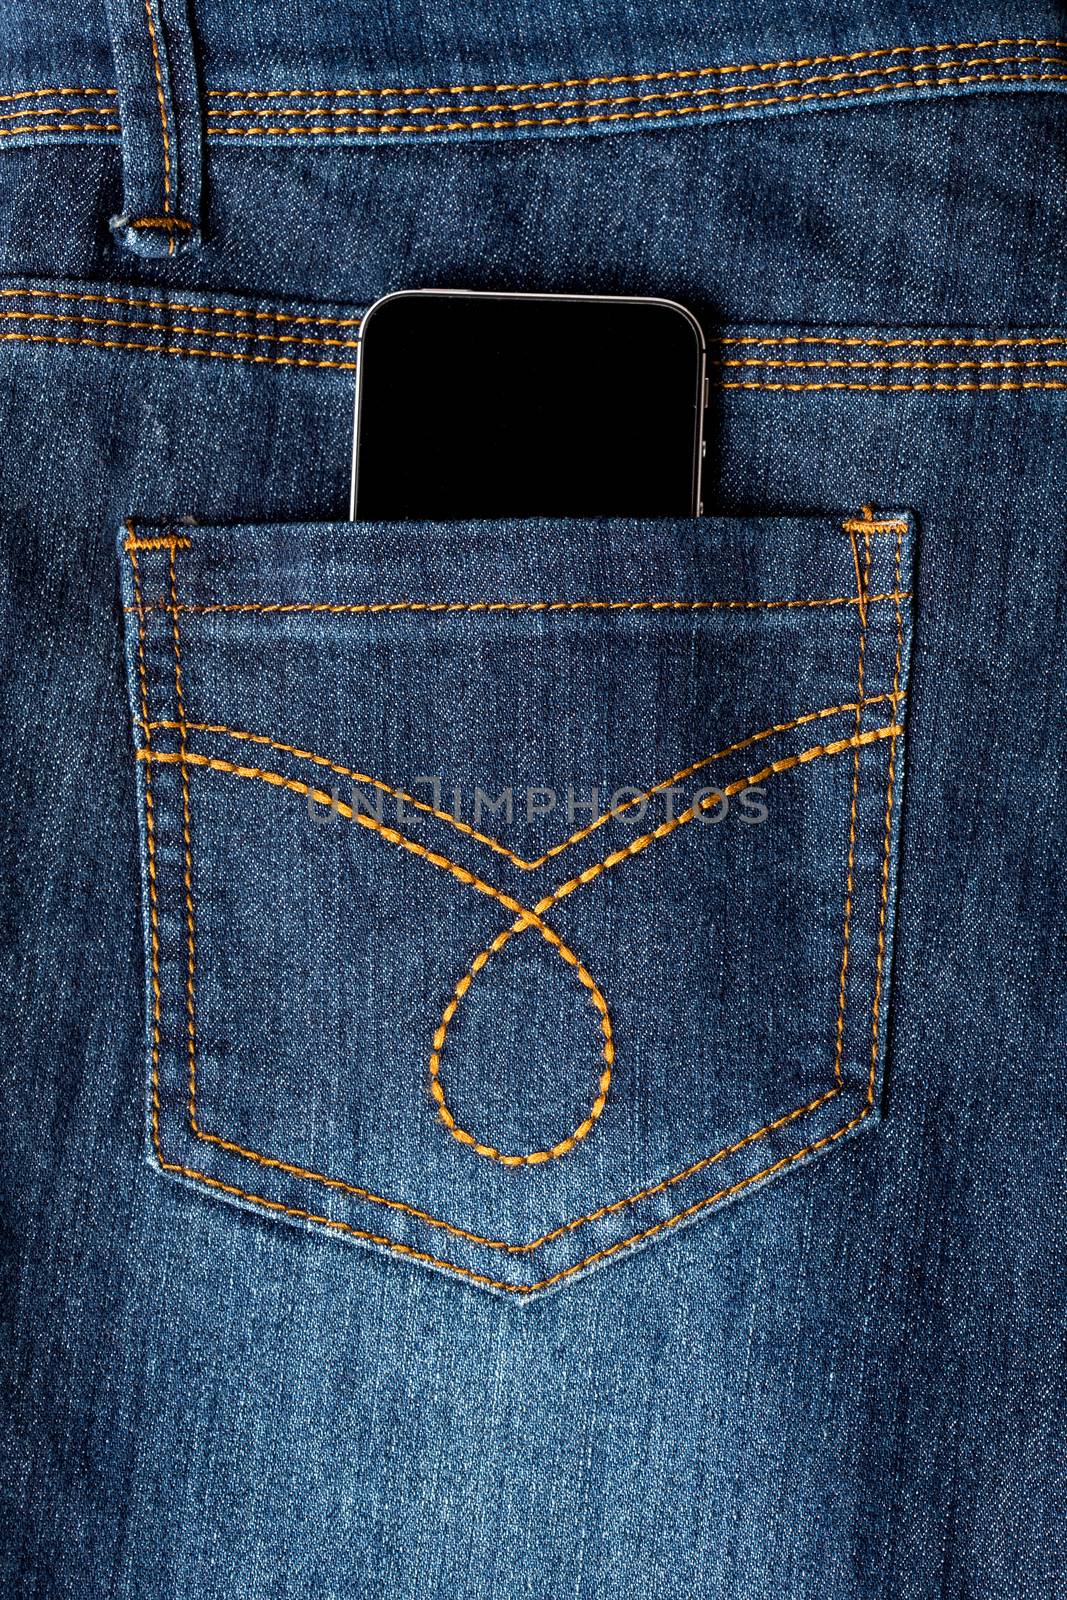 Mobile phone in denim jeans back pocket